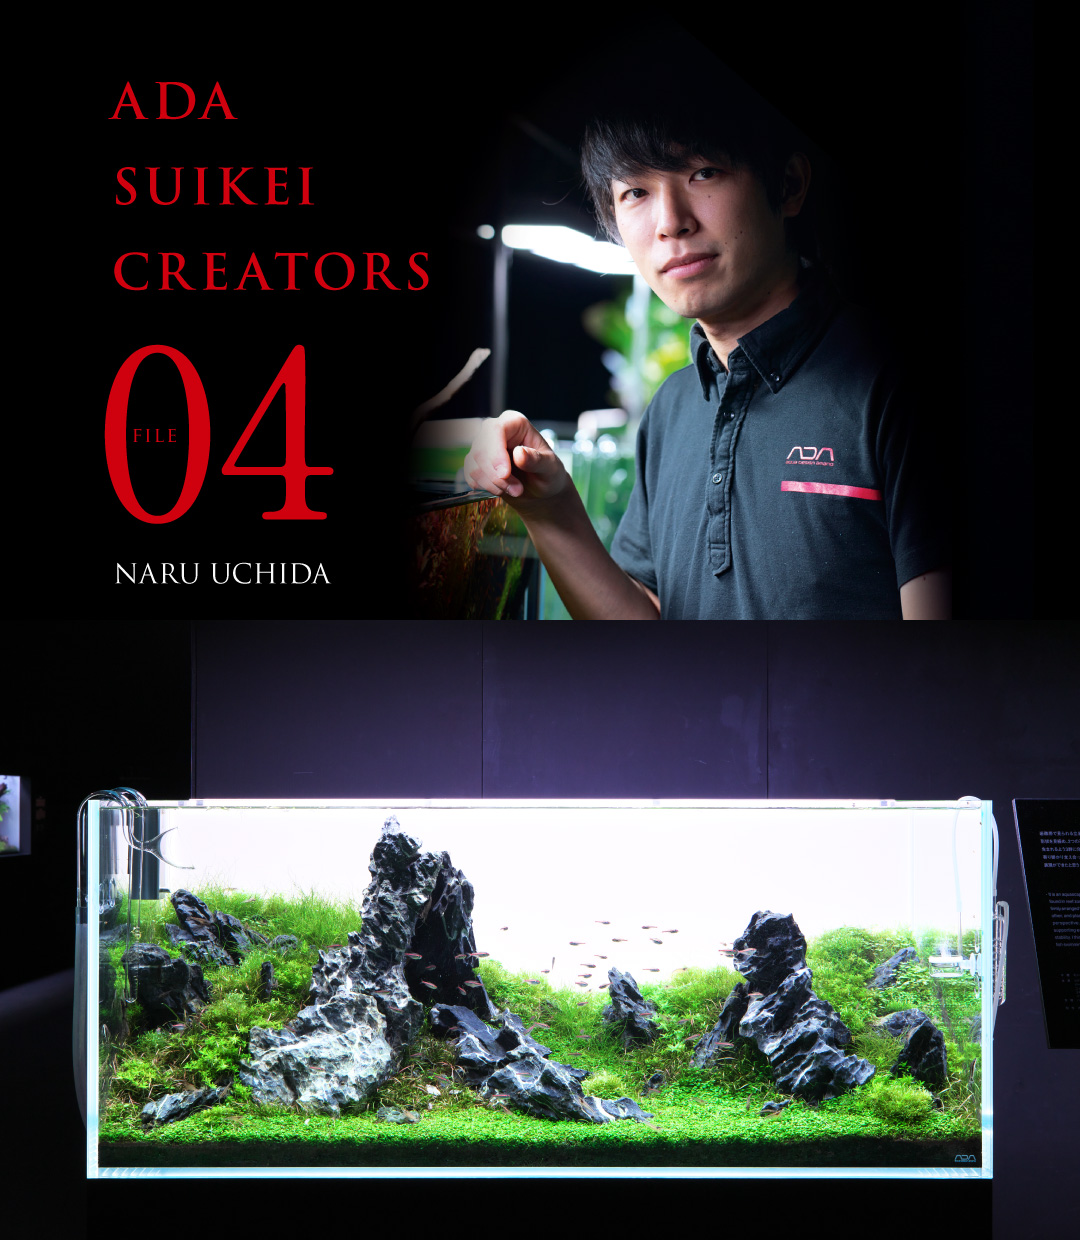 ADA SUIKEI CREATORS #04 Naru Uchida